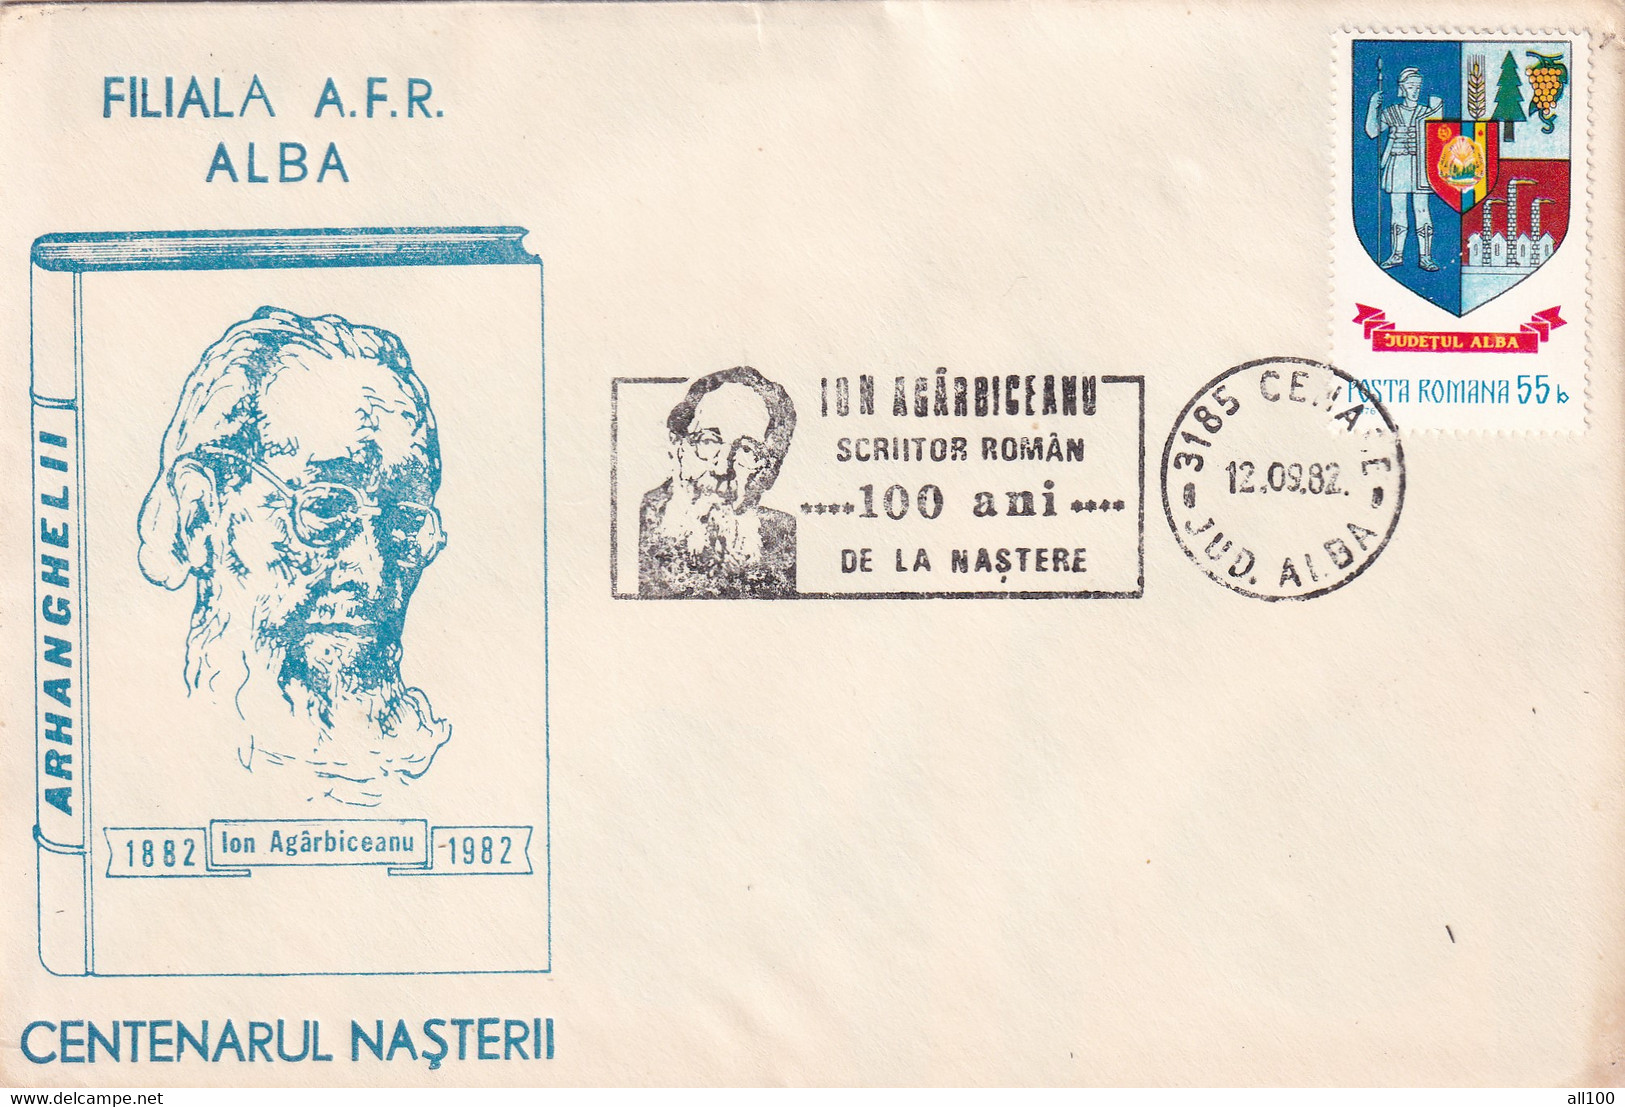 A21967 - Centenarul Nasterii Ion Agarbiceanu Arhangheli Alba Cover Envelope Used 1982 RS Romania Stamp Judetul Alba - Lettres & Documents